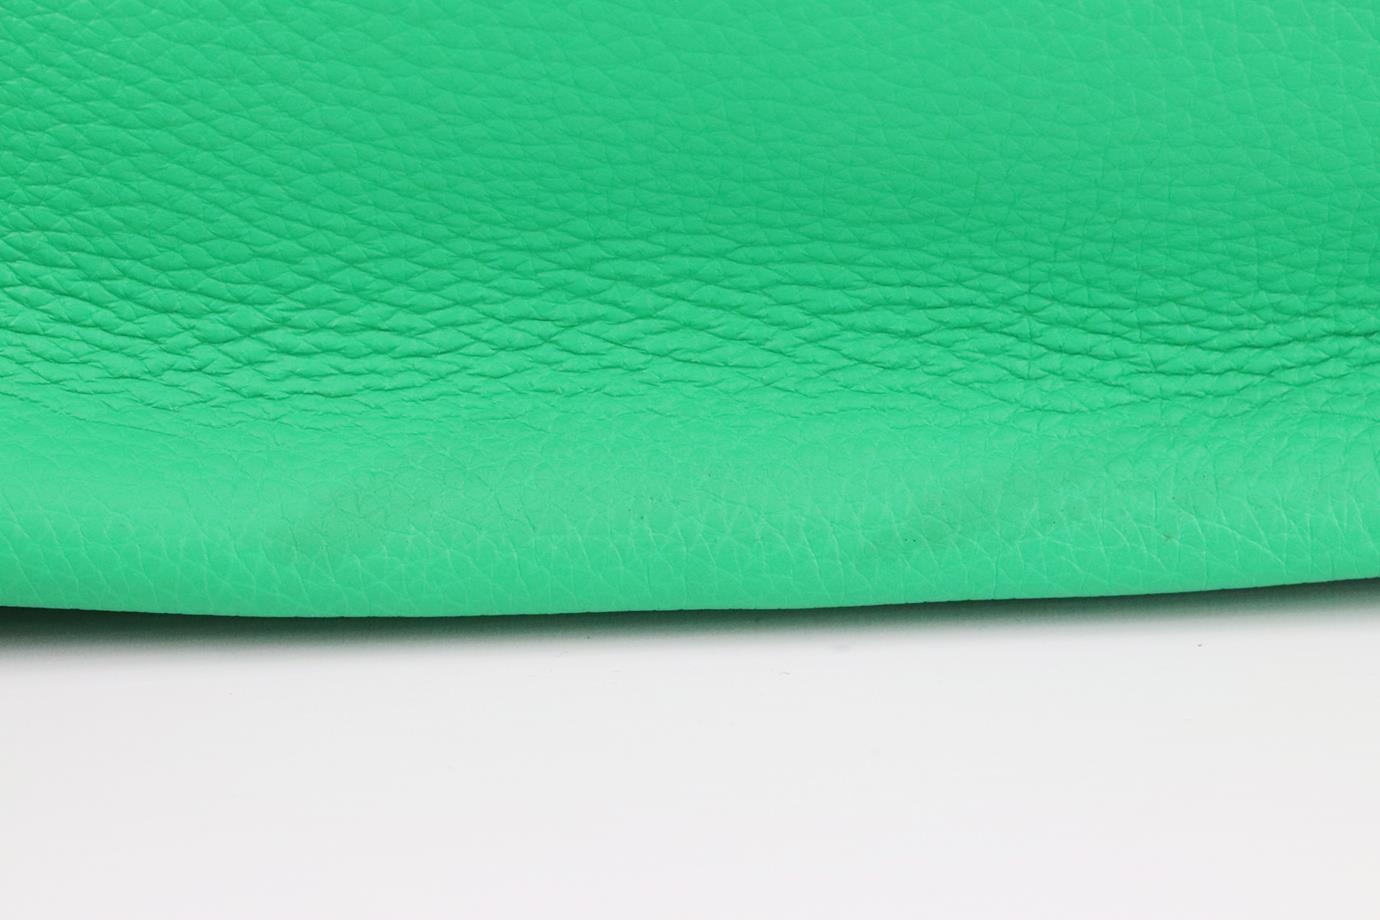 Hermès 2012 Birkin 35cm Togo Leather Bag For Sale 6